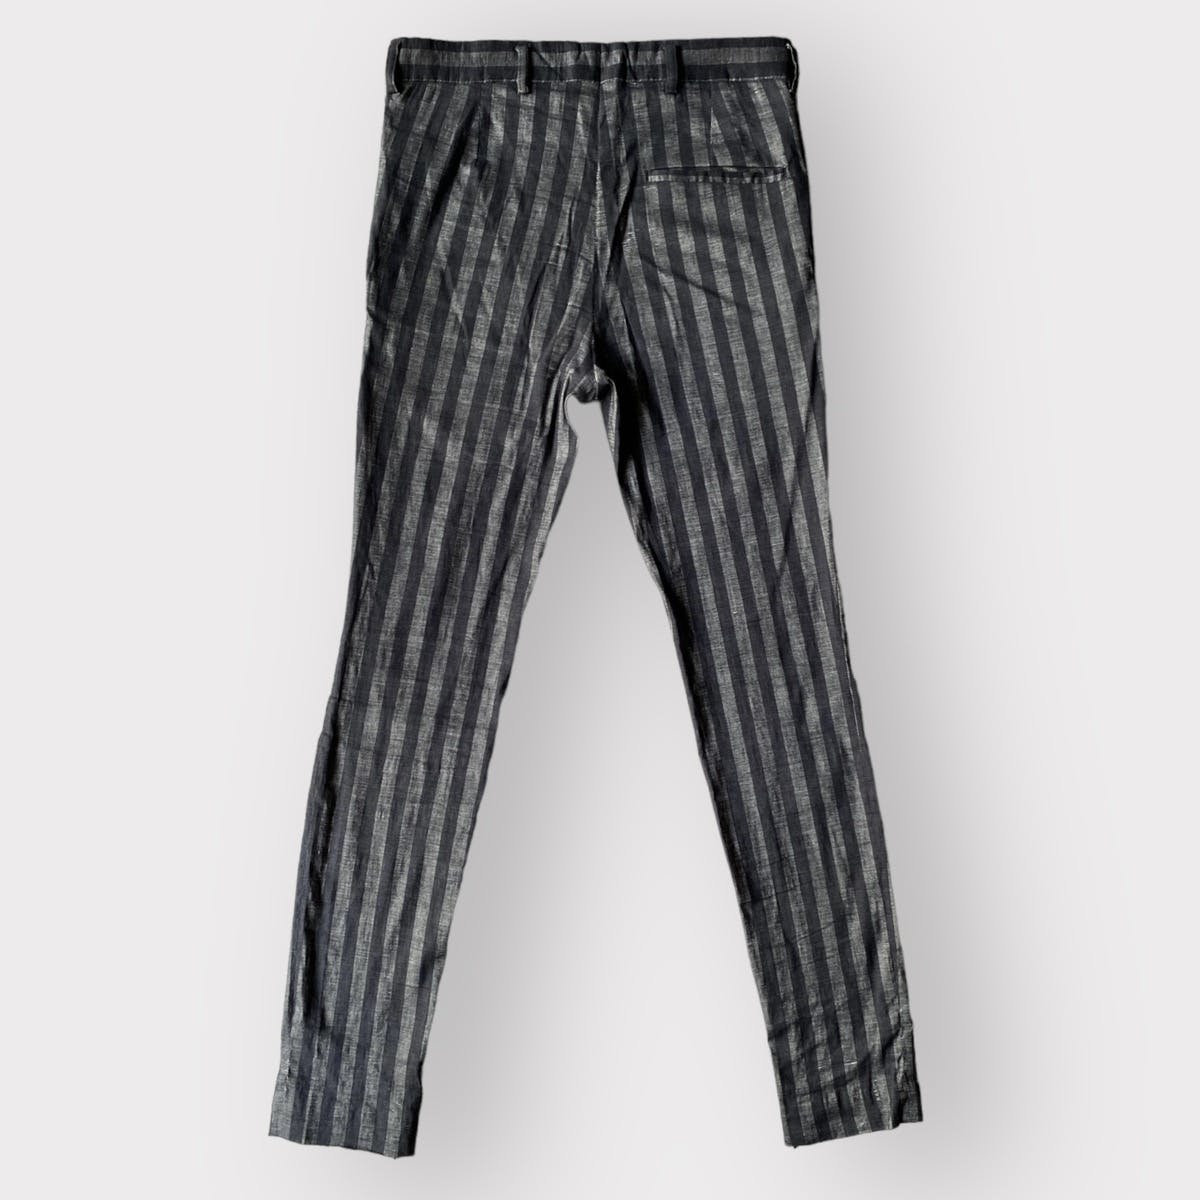 SS15 Stretch Cotton/Linen Skinny Pants - 5